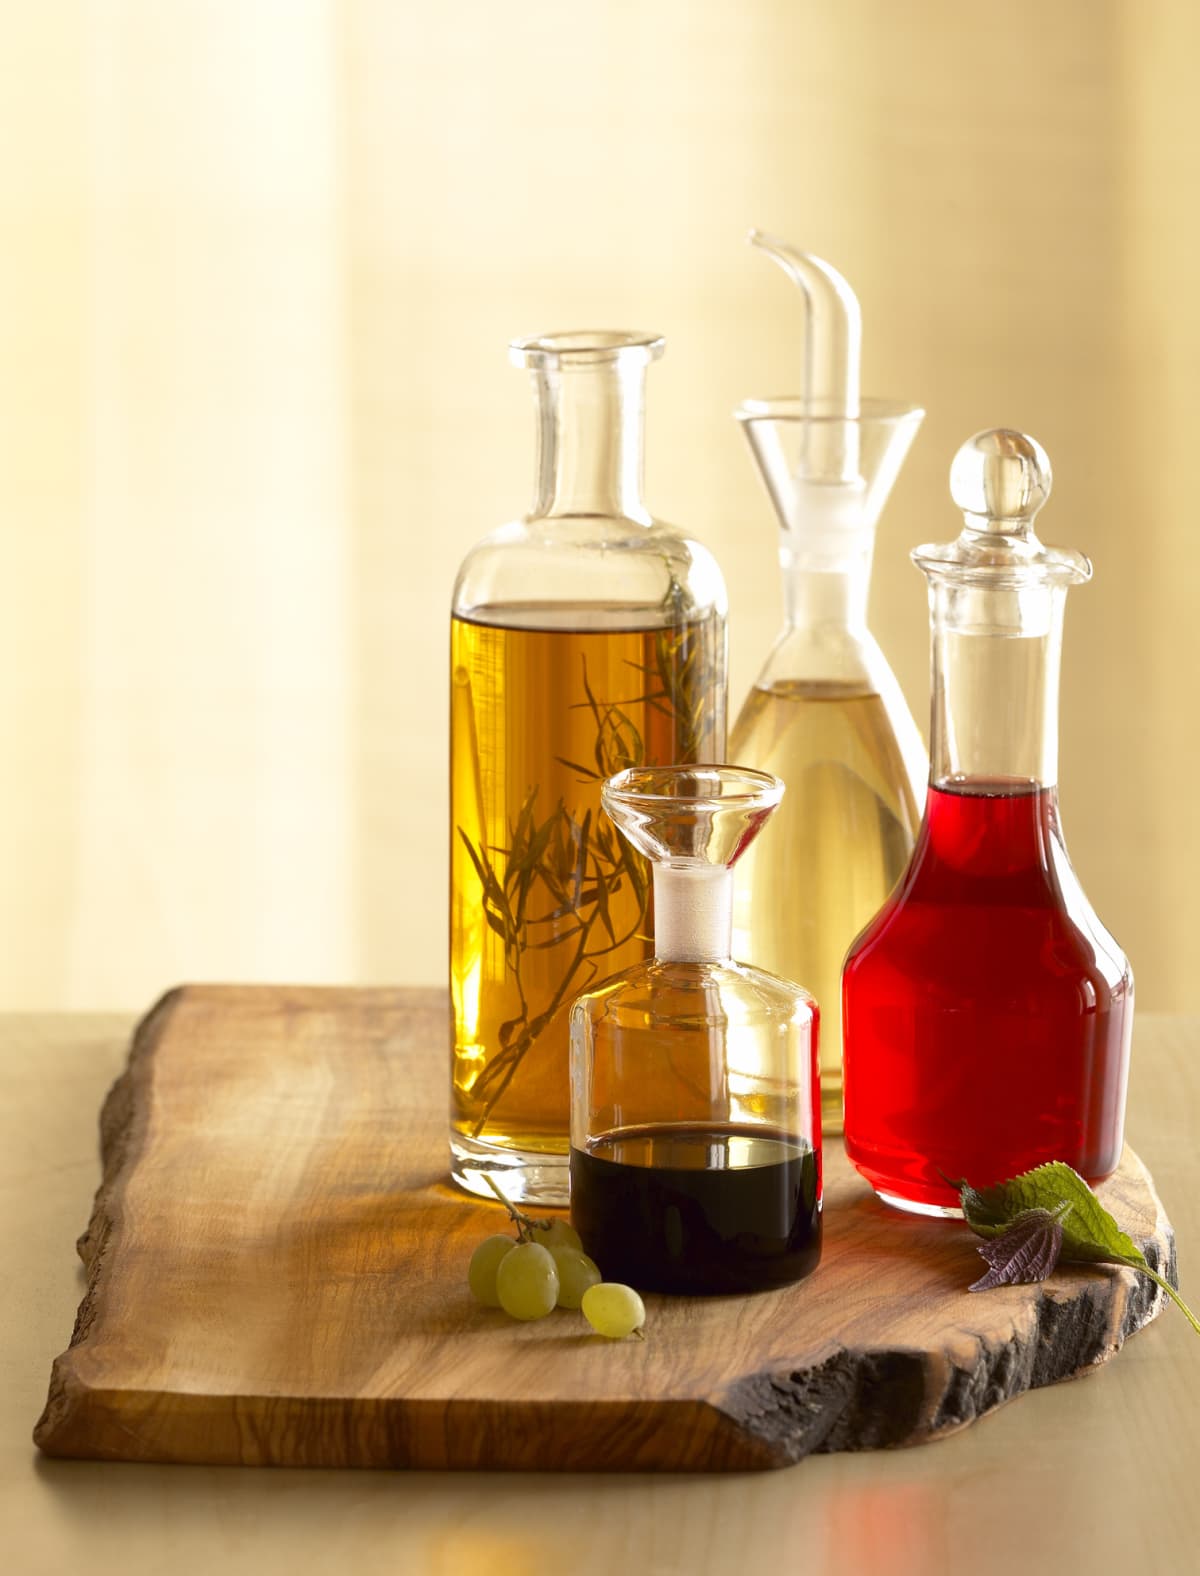 An assortment of vinegars